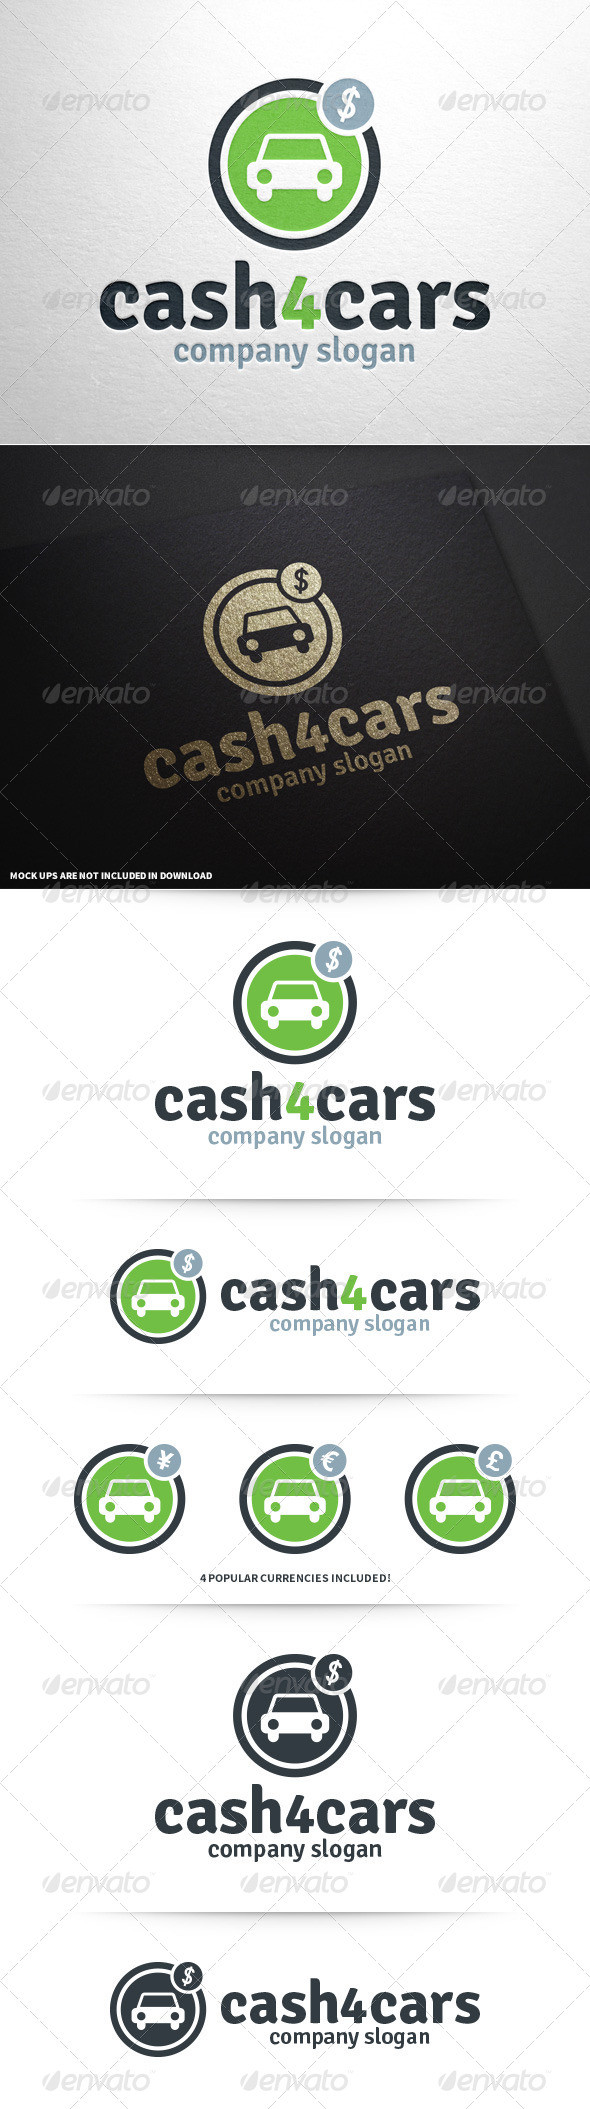 Cash 4 cars logo template